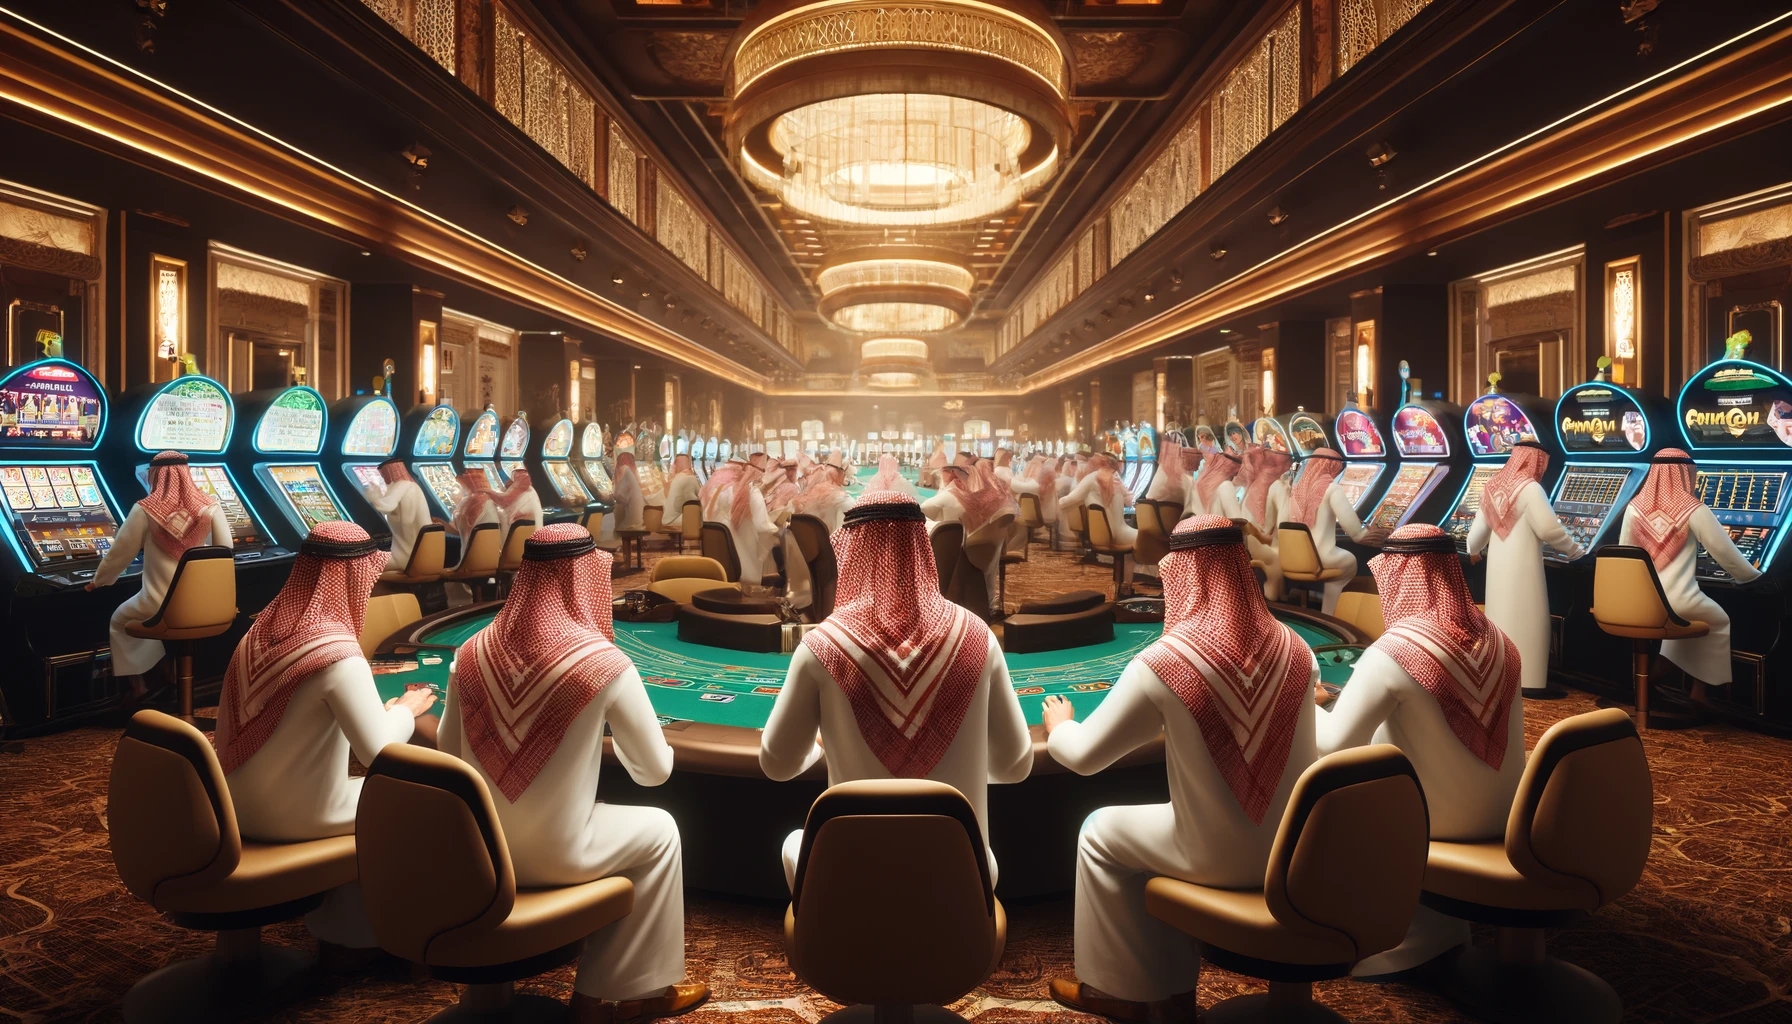 Arab men in the casino